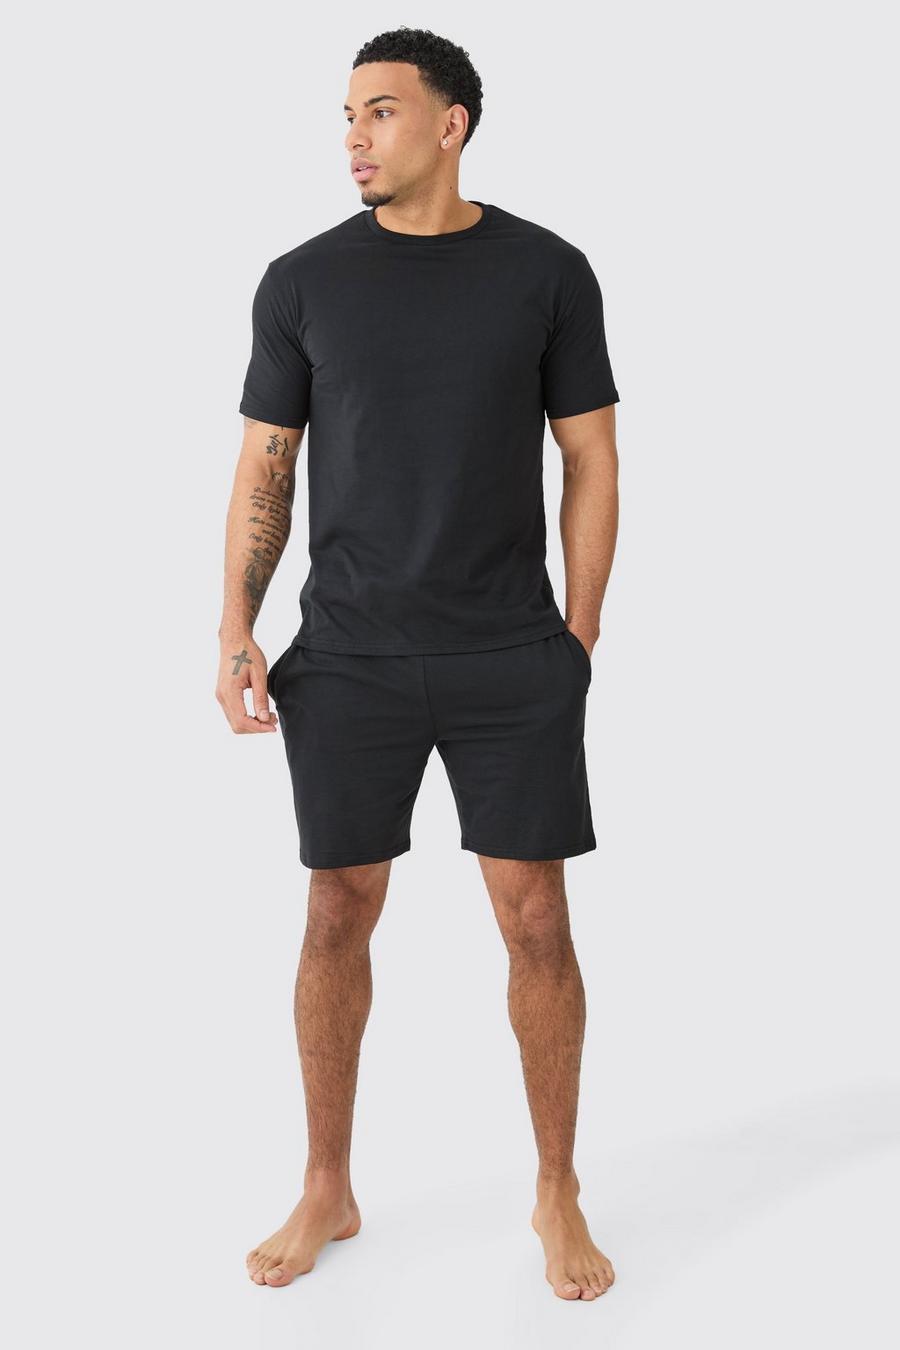 Black T-Shirt En Shorts Lounge Set